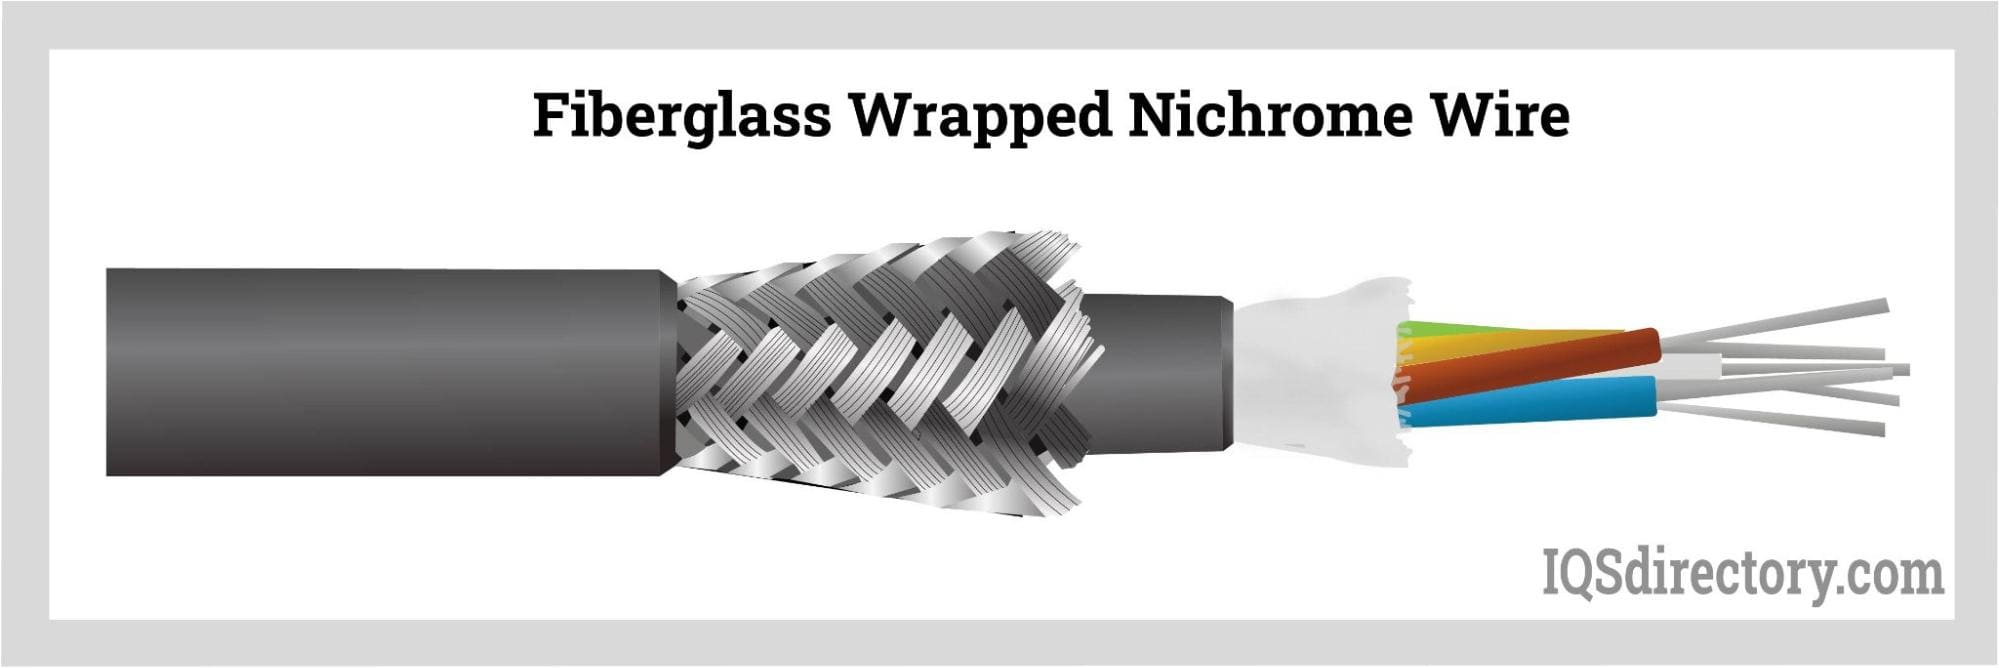 Fiberglass Wrapped Nichrome Wire